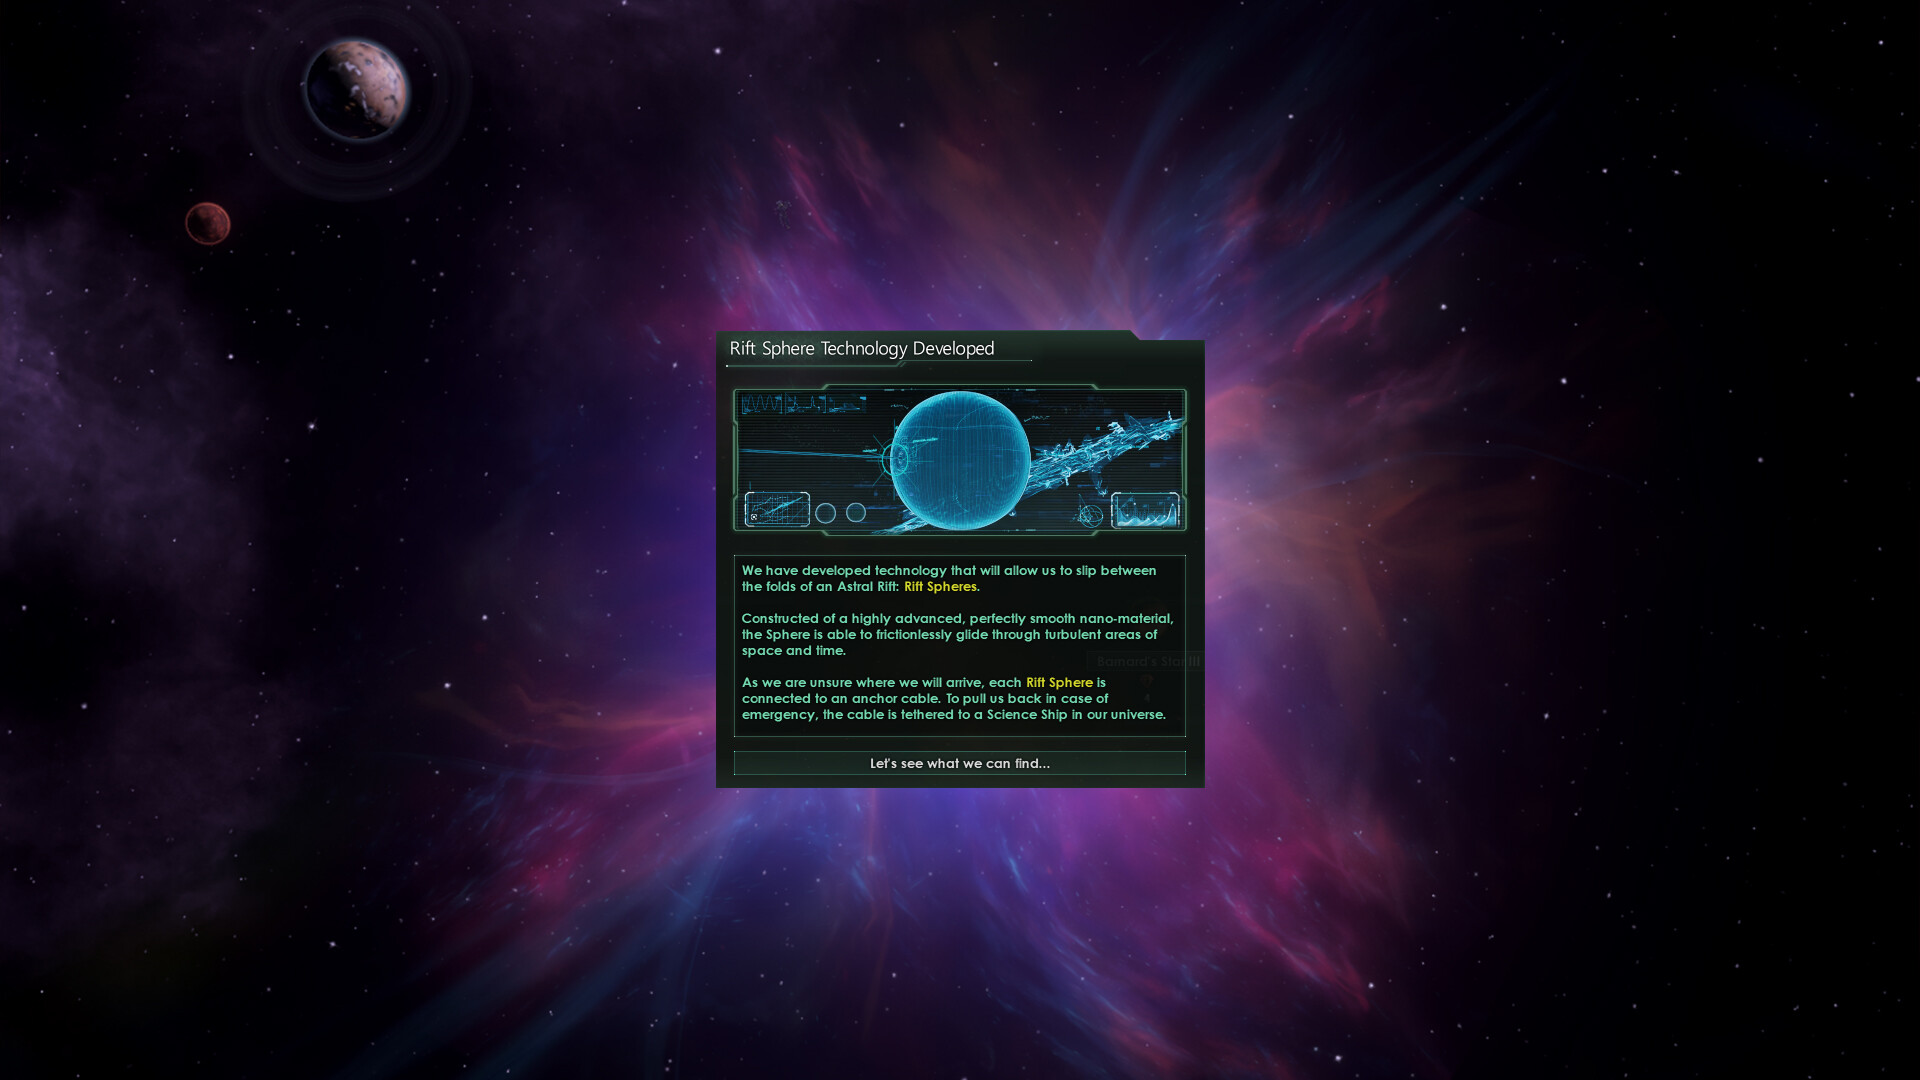 Stellaris - Astral Planes DLC Steam CD Key